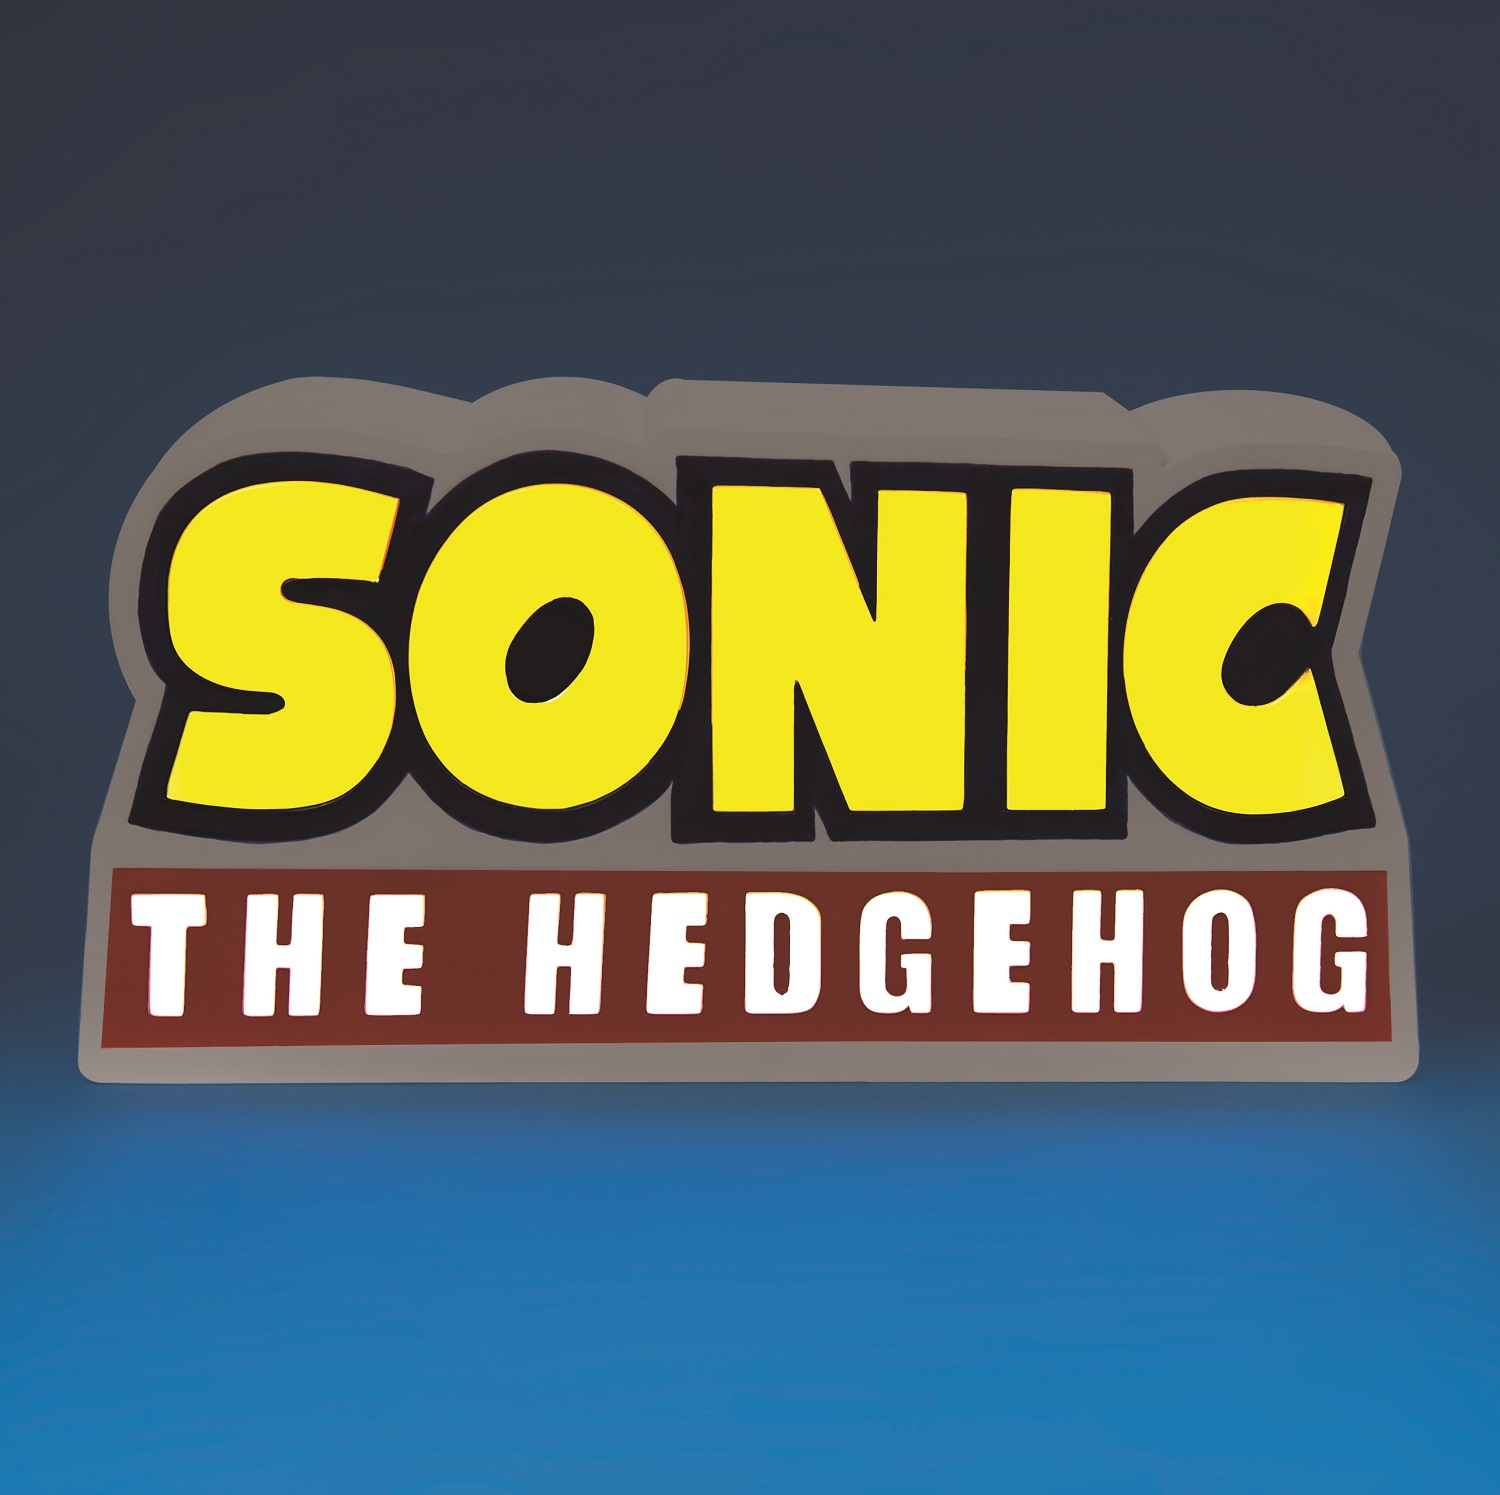 Sonic Hedgehog The Logo